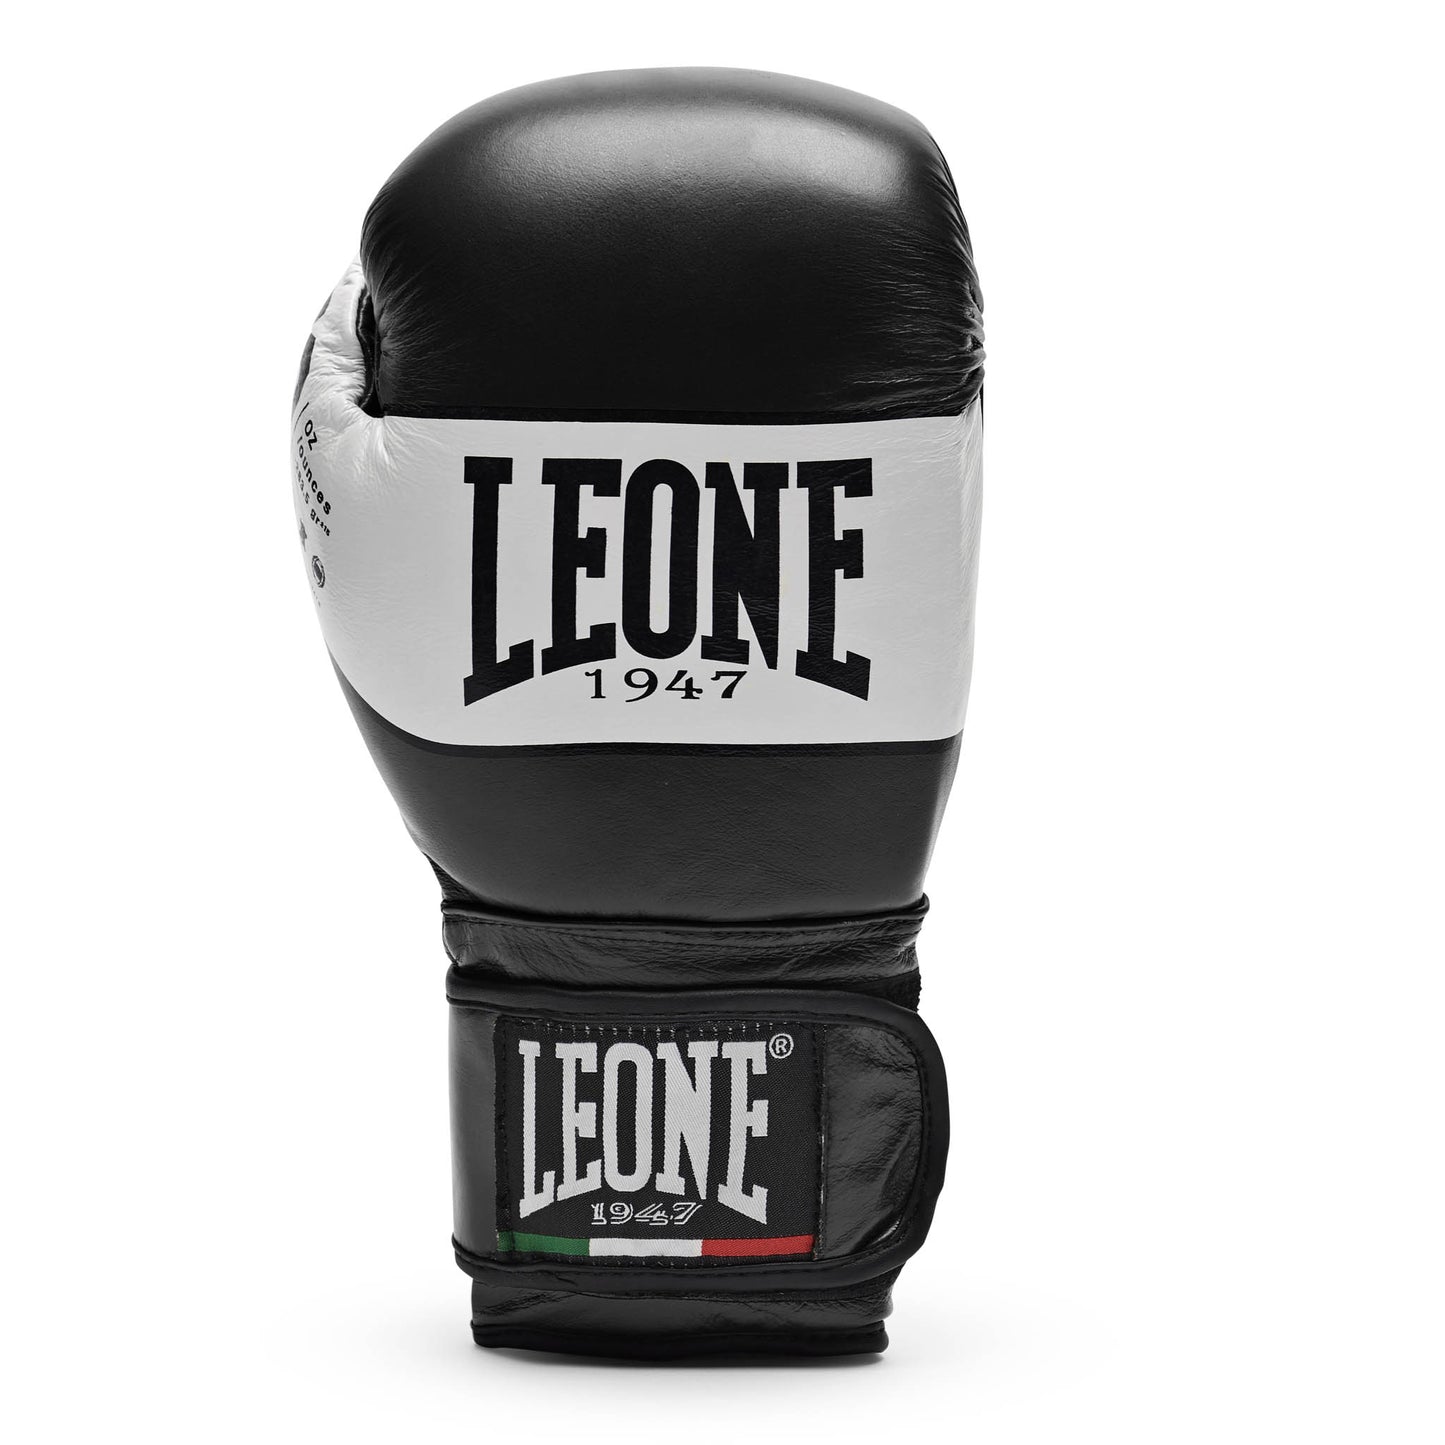 Leone Boxhandschuhe Shock